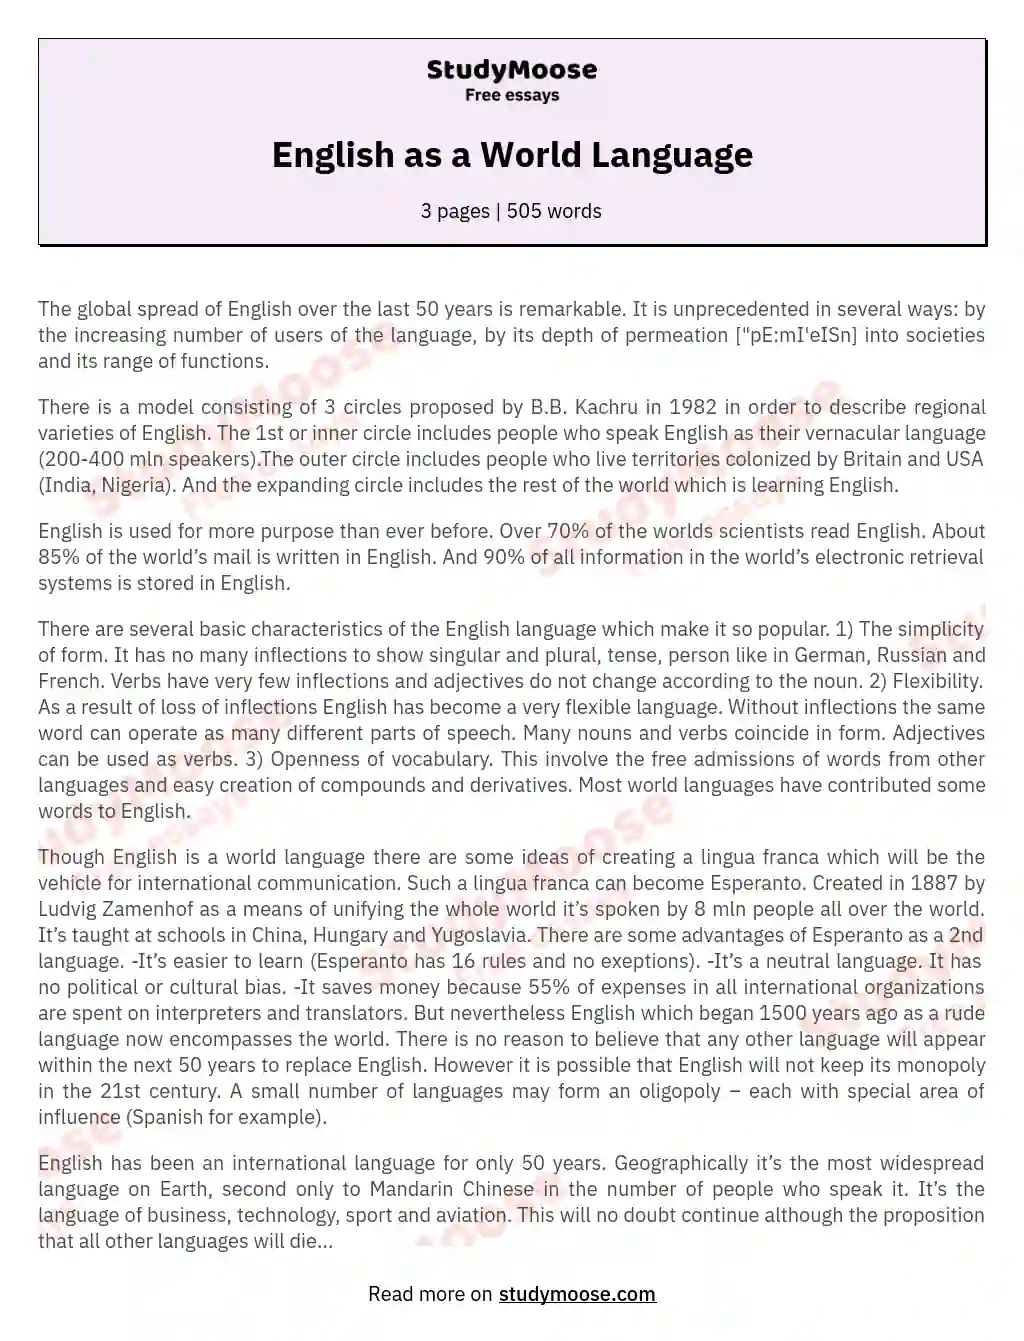 English as a World Language essay